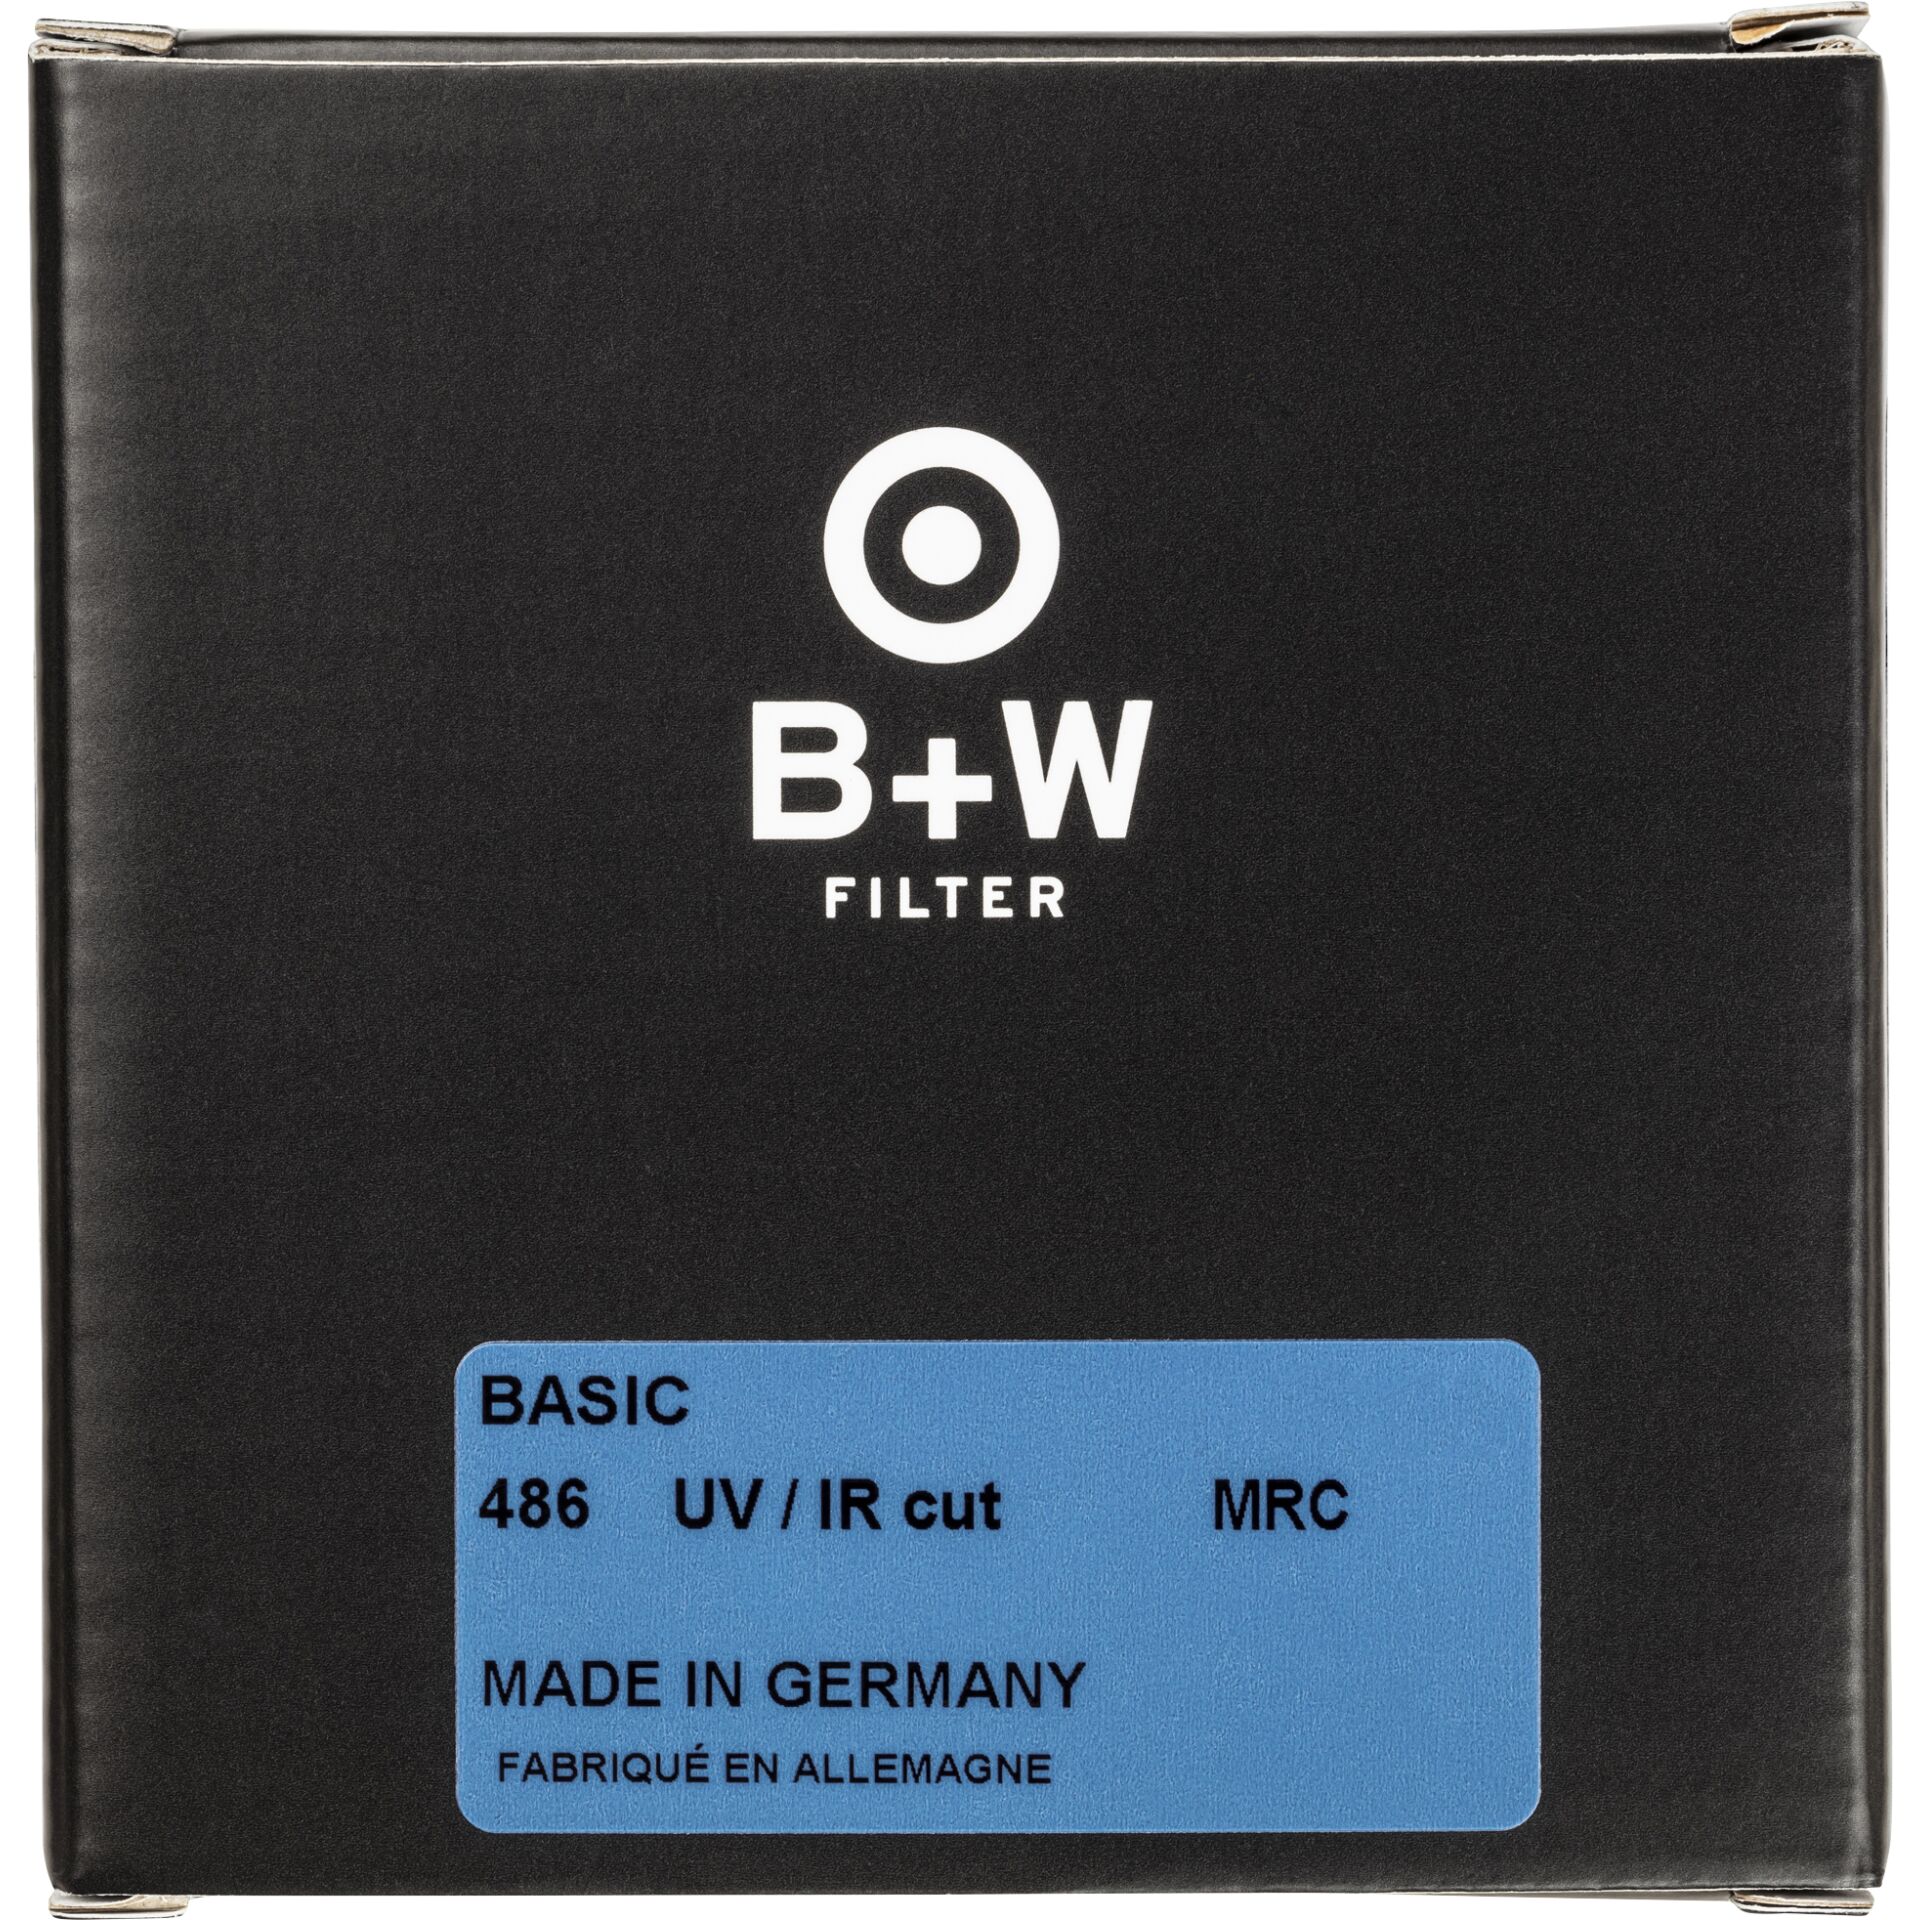 B+W UV-IR CUT 486 MRC BASIC 58mm